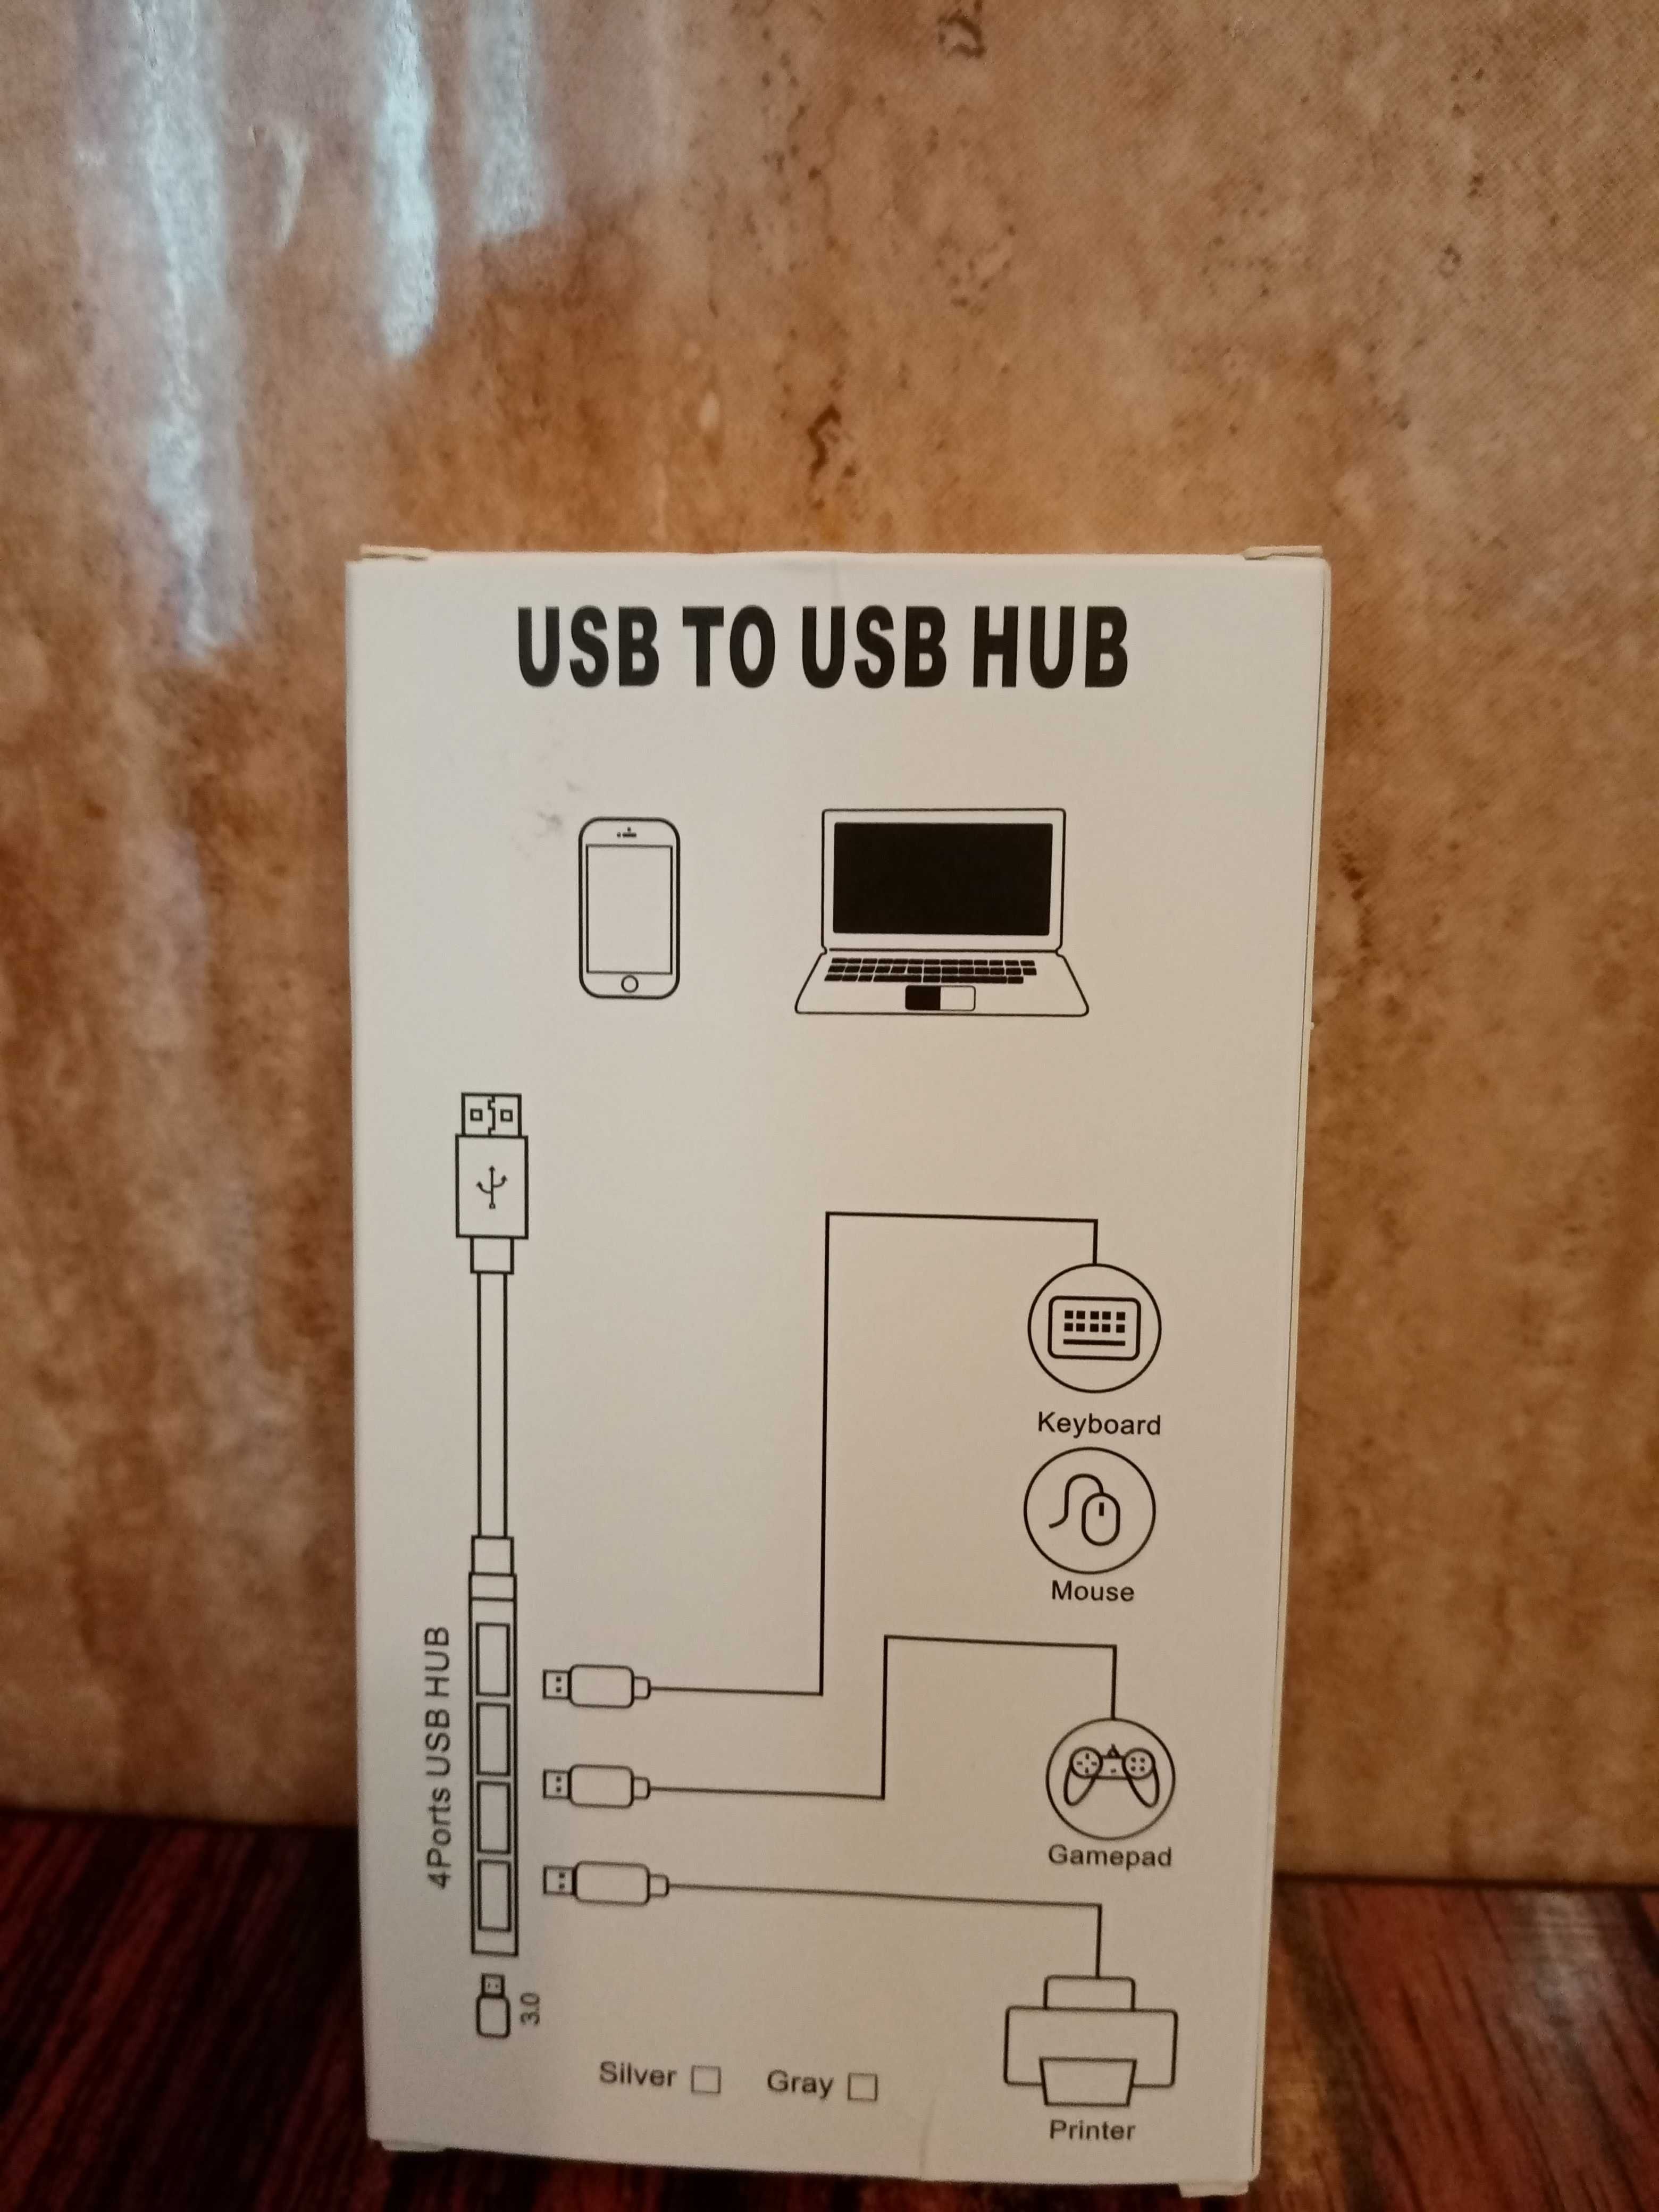 USB -2.0, - 3.0-Adapter.